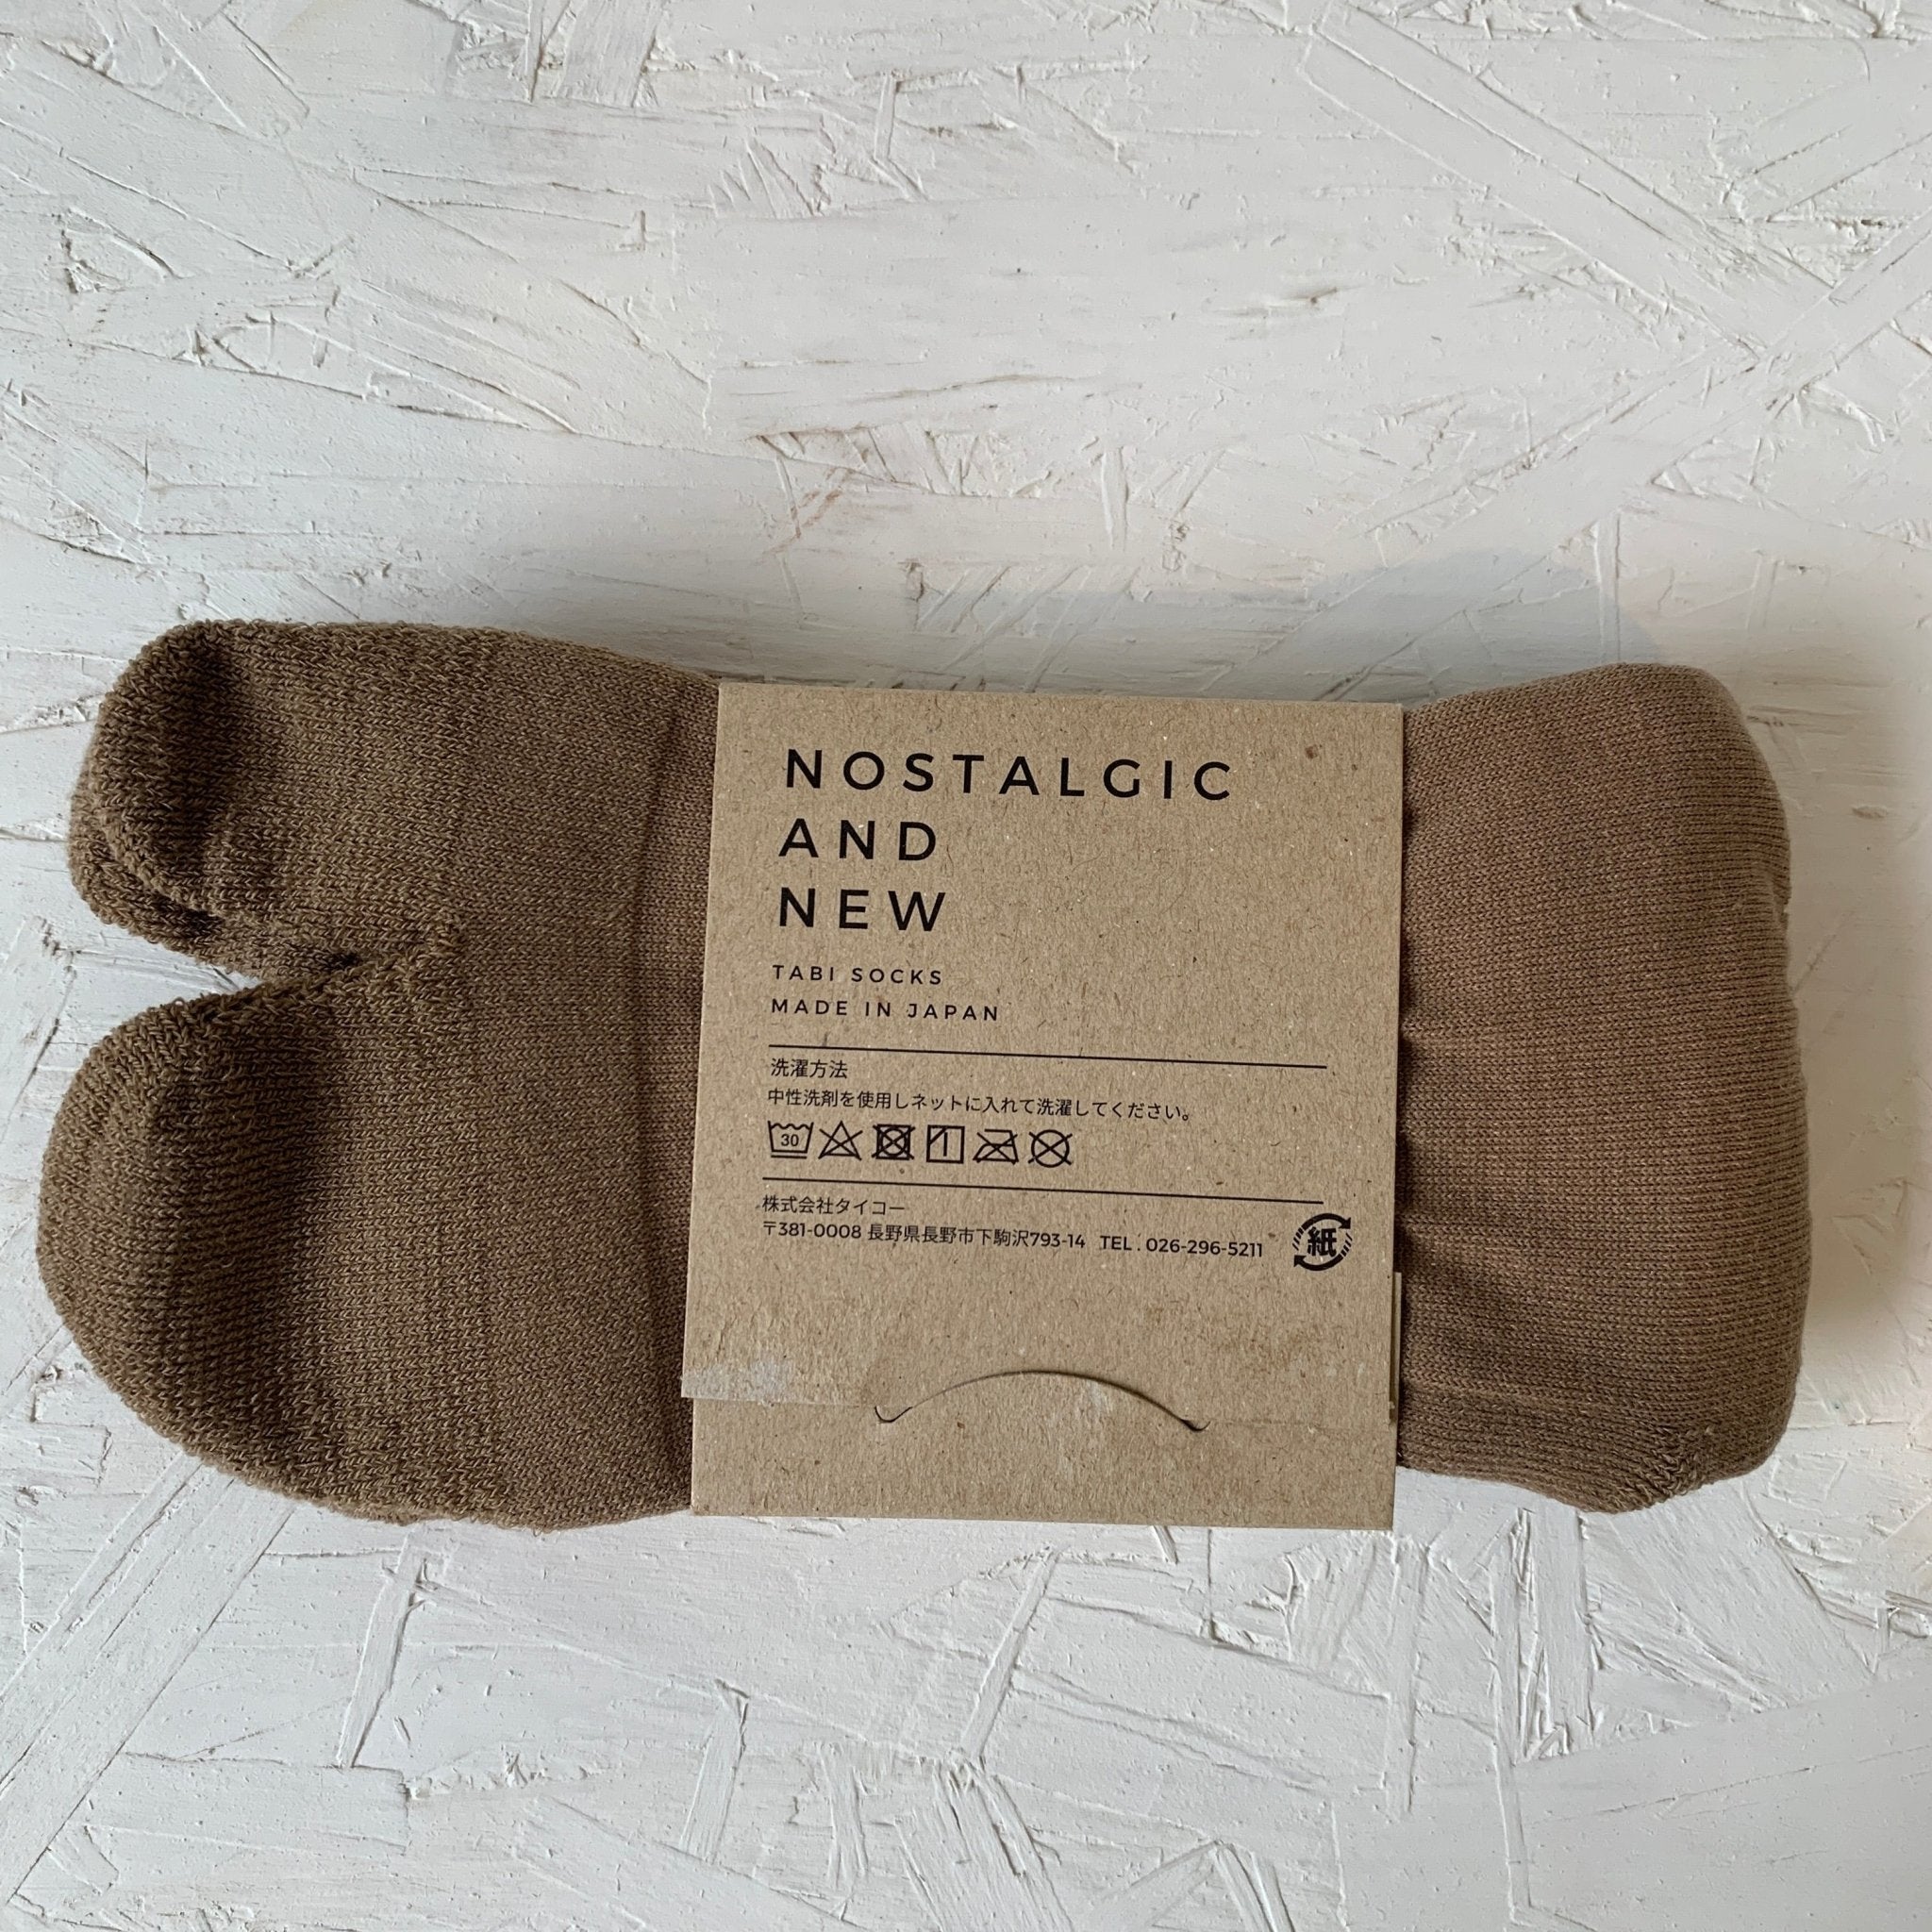 AMITABI Merino Wool Tabi Socks - Taiko Co.Ltd - MIKAFleur